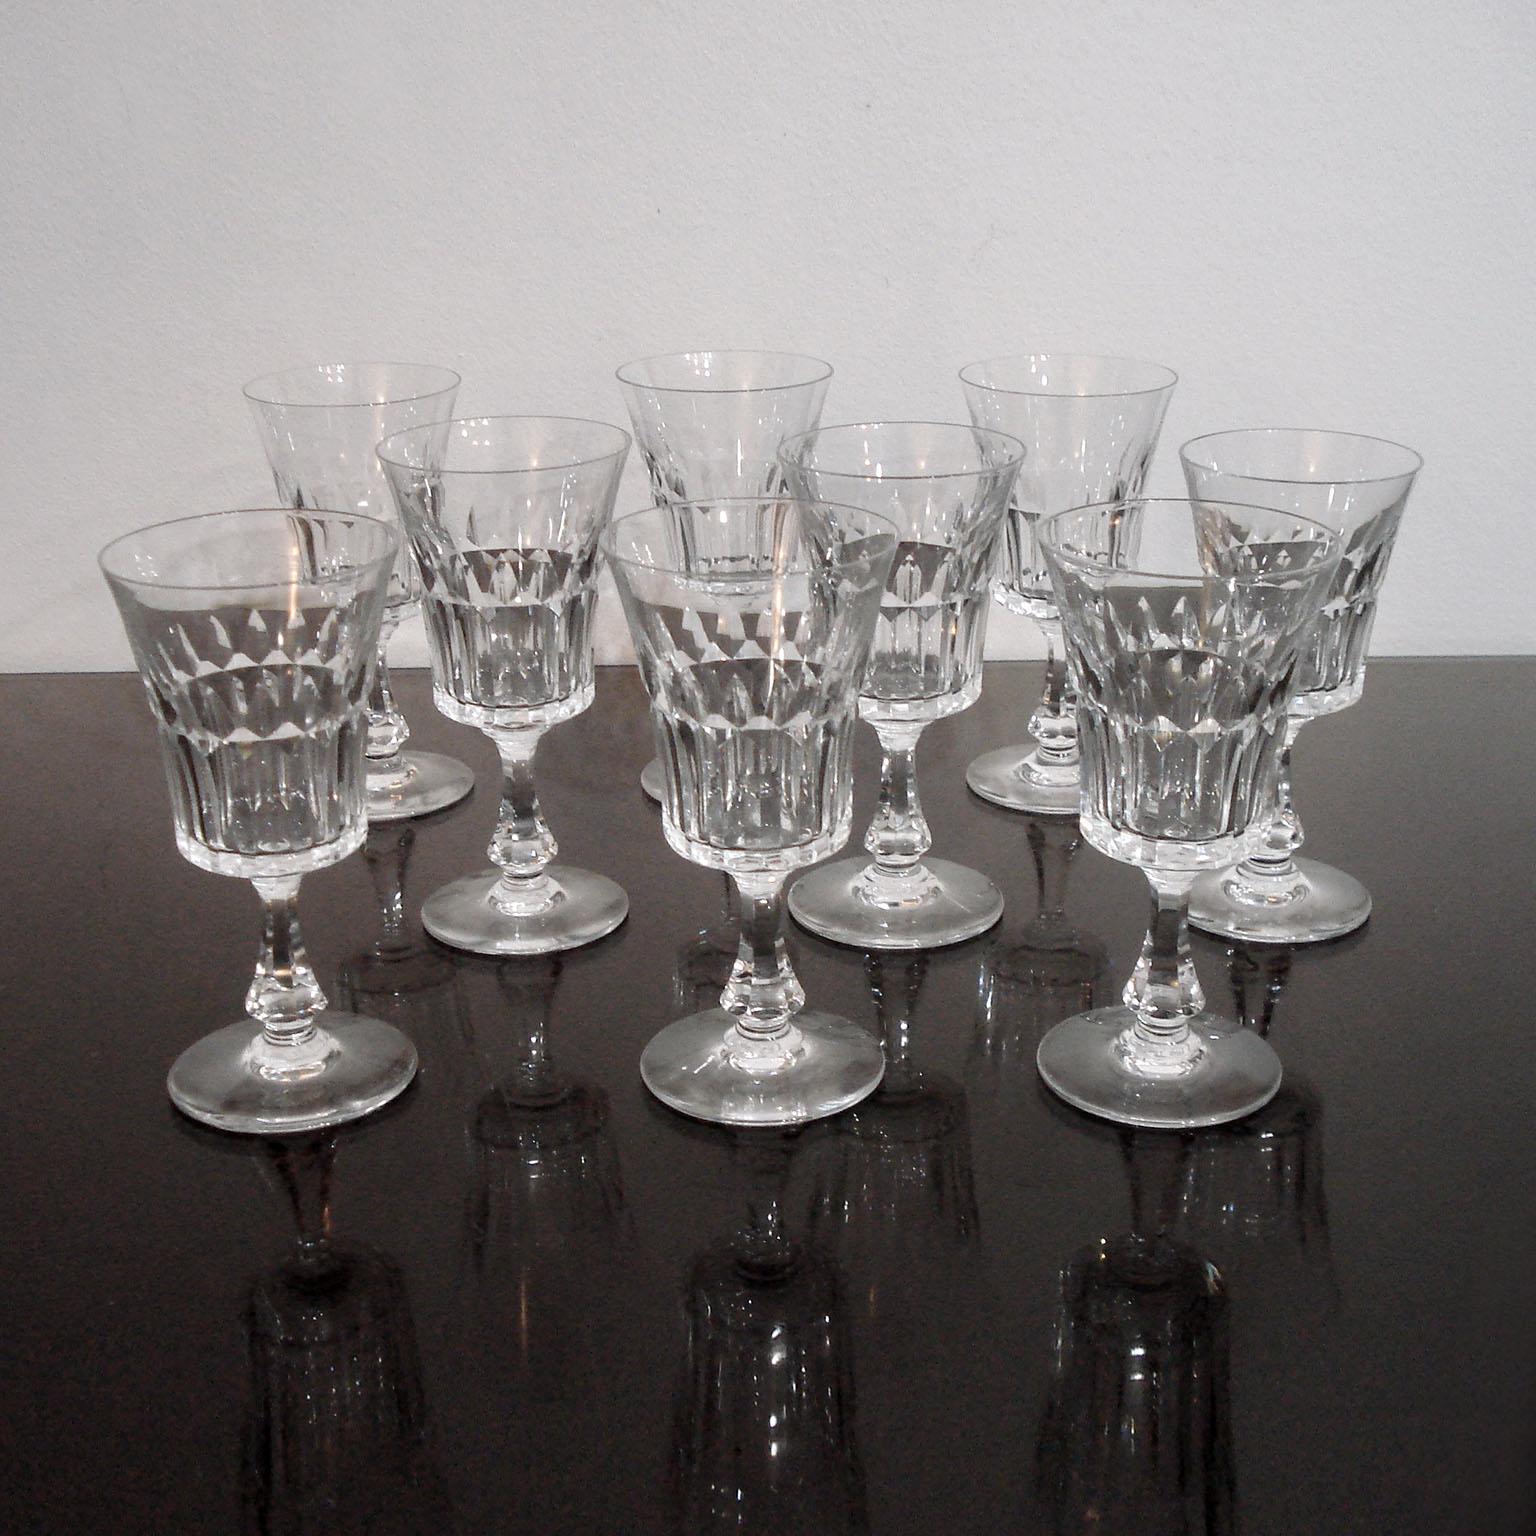 1950s wine glasses